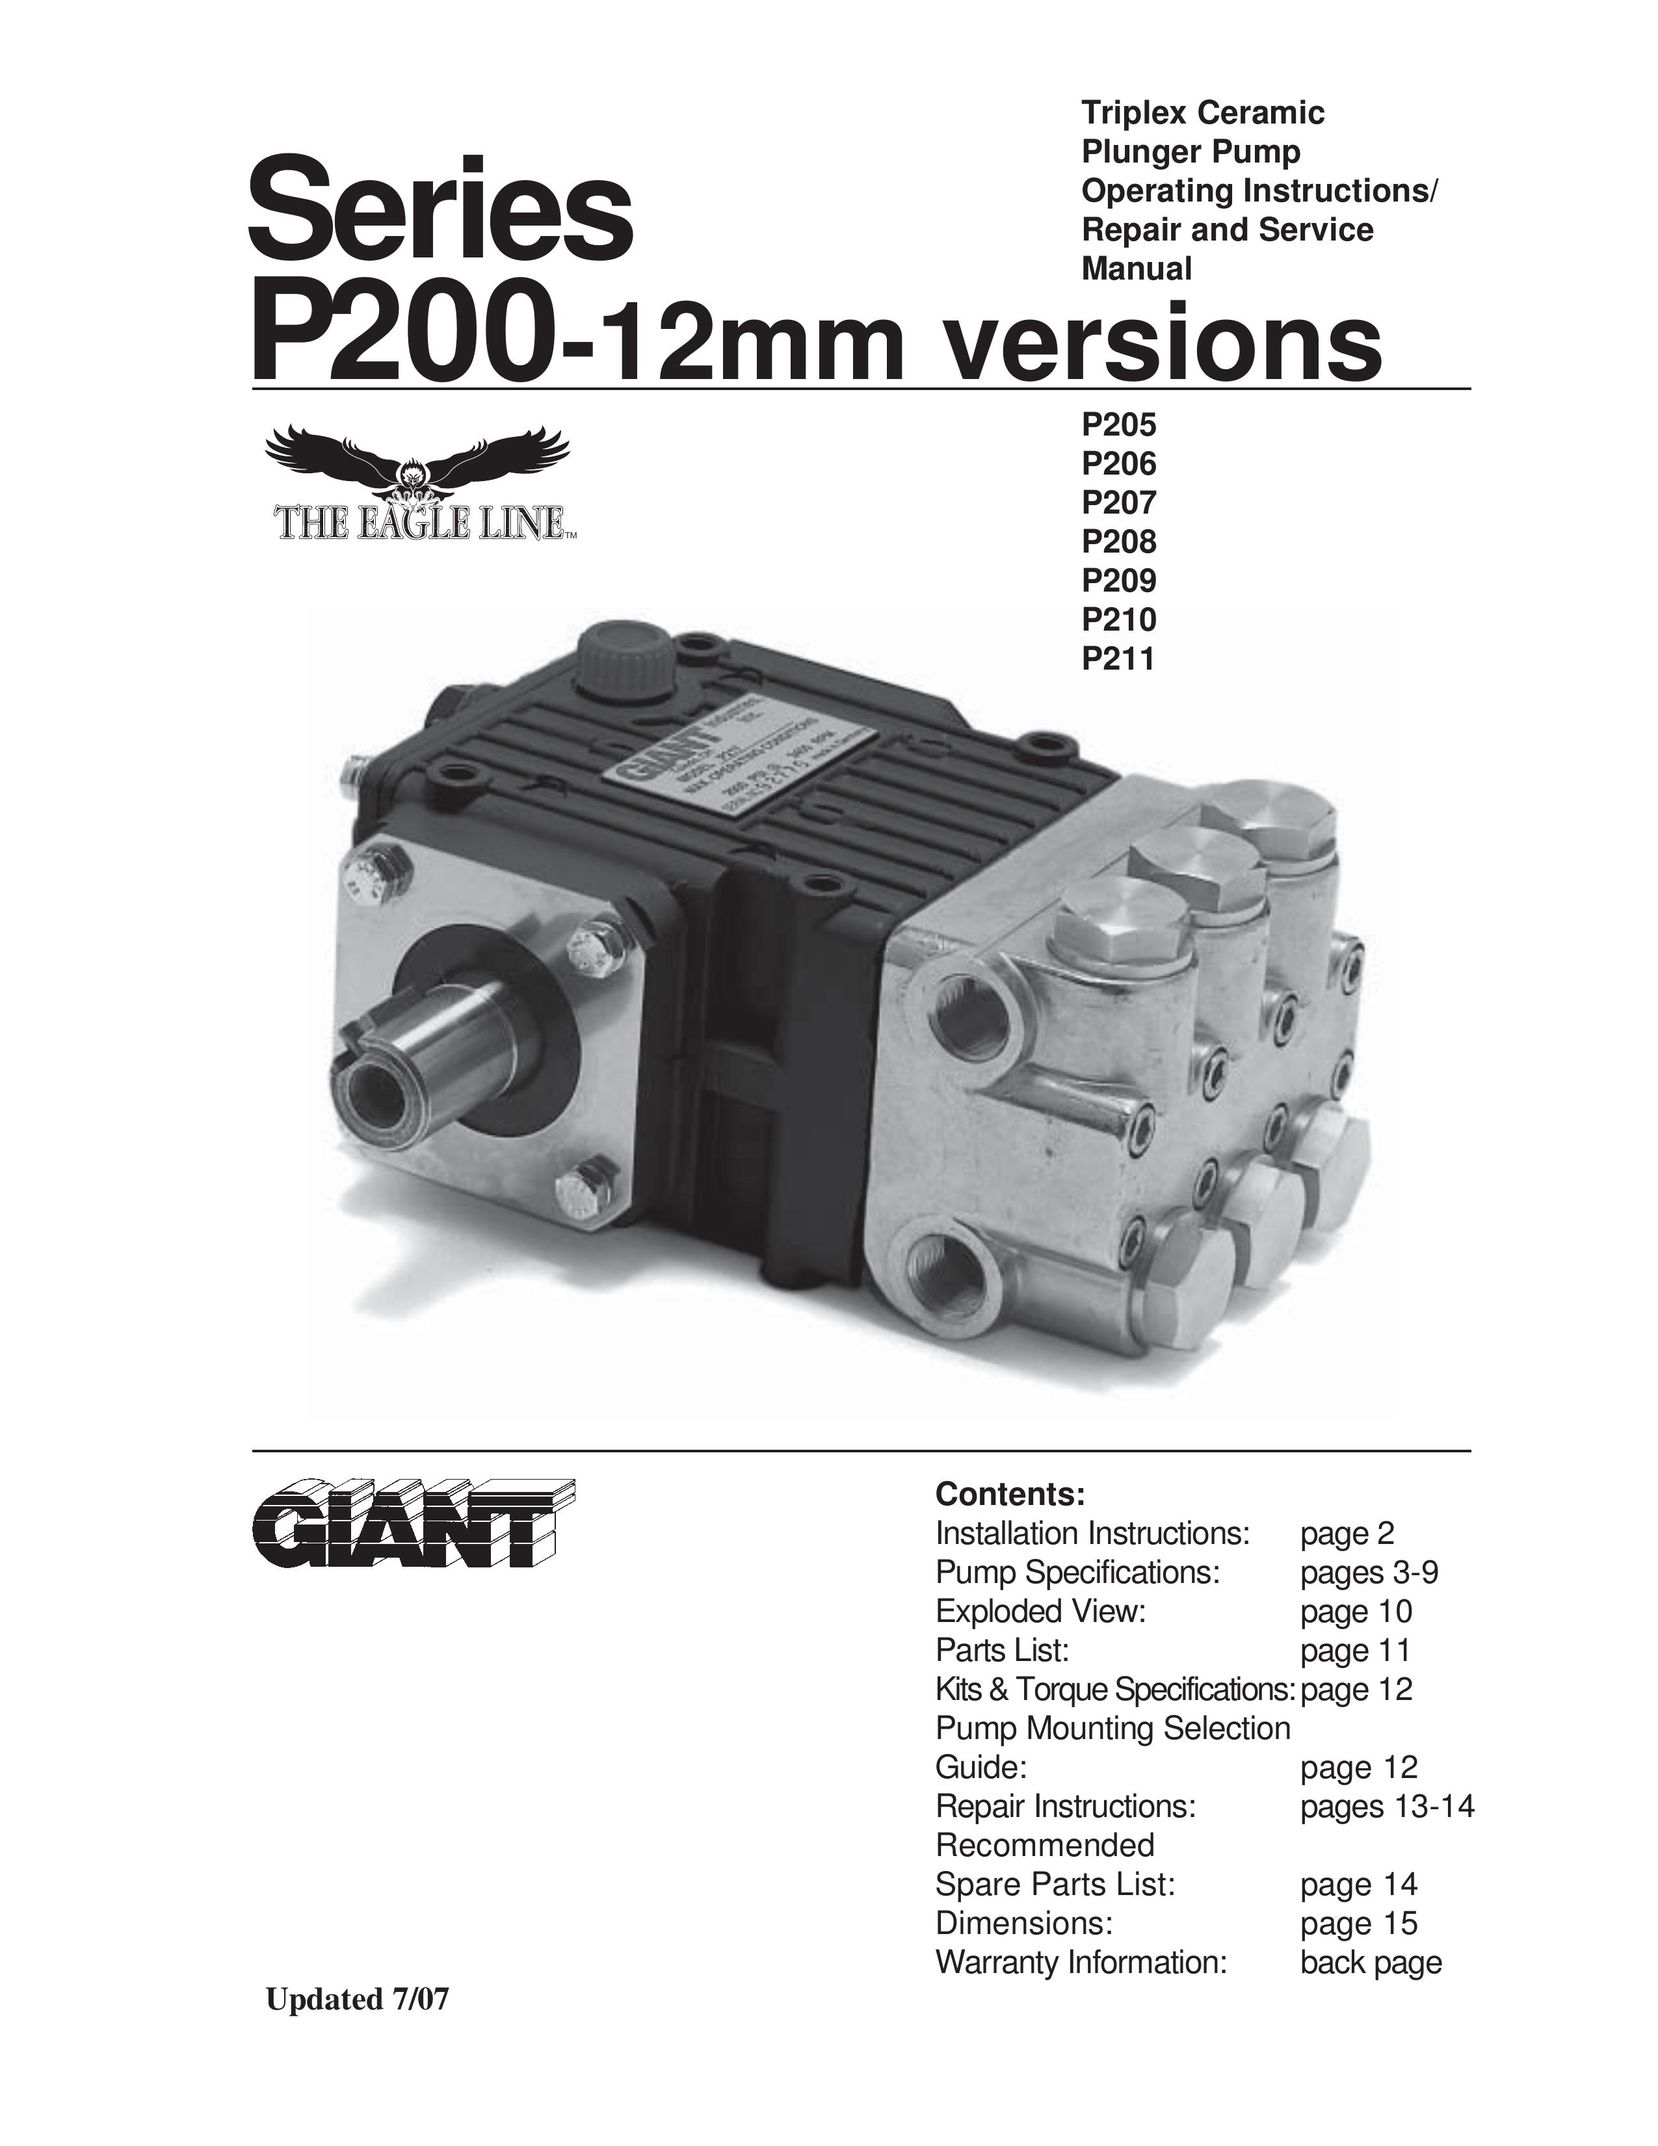 Giant P205 Heat Pump User Manual